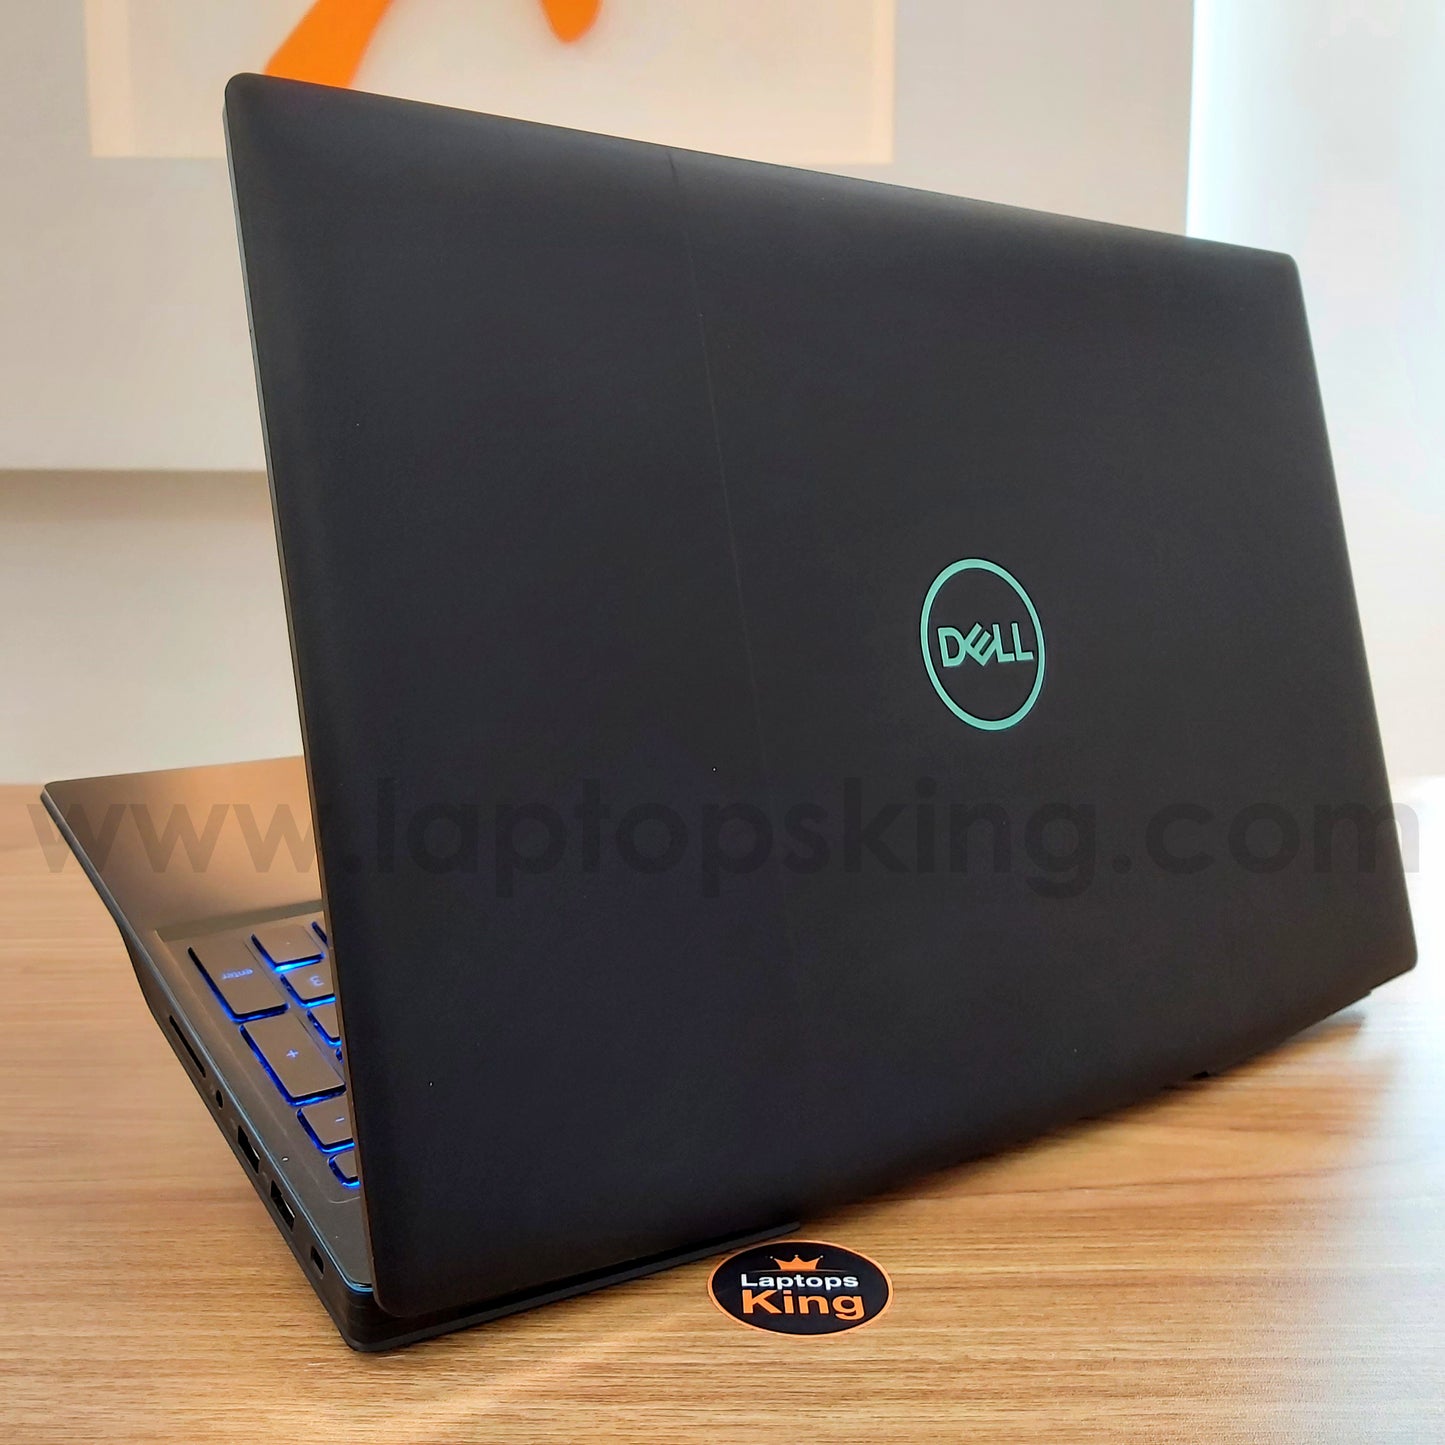 Dell G3 3500 i7-10750h Gtx 1650 Ti 120hz Gaming Laptop (Open Box)